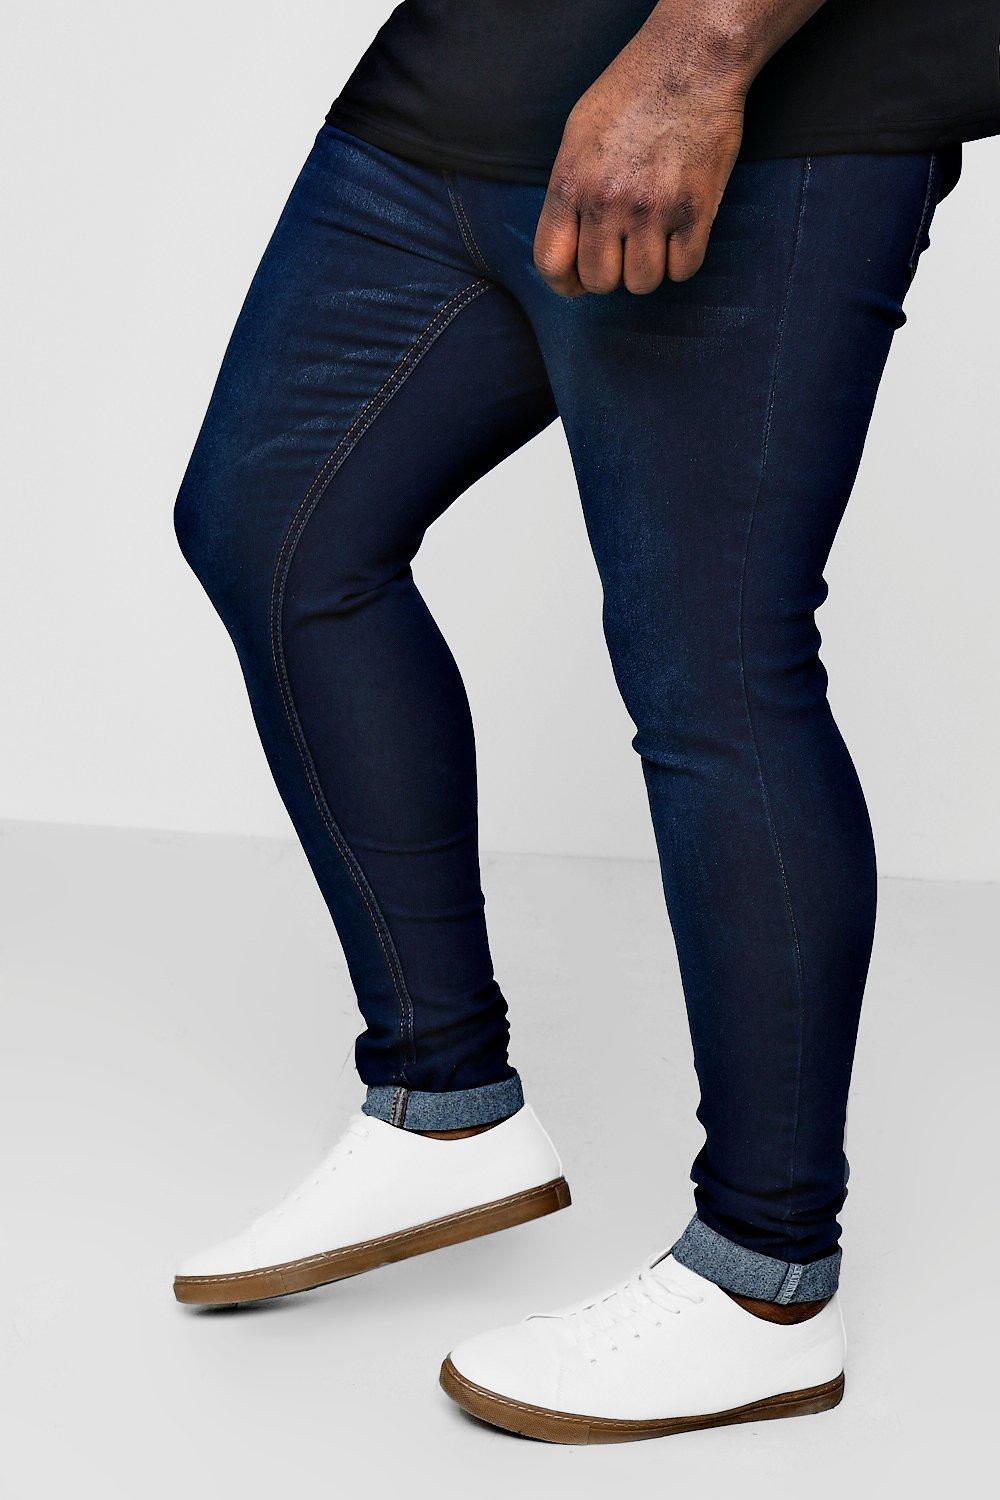 size 16 straight leg jeans